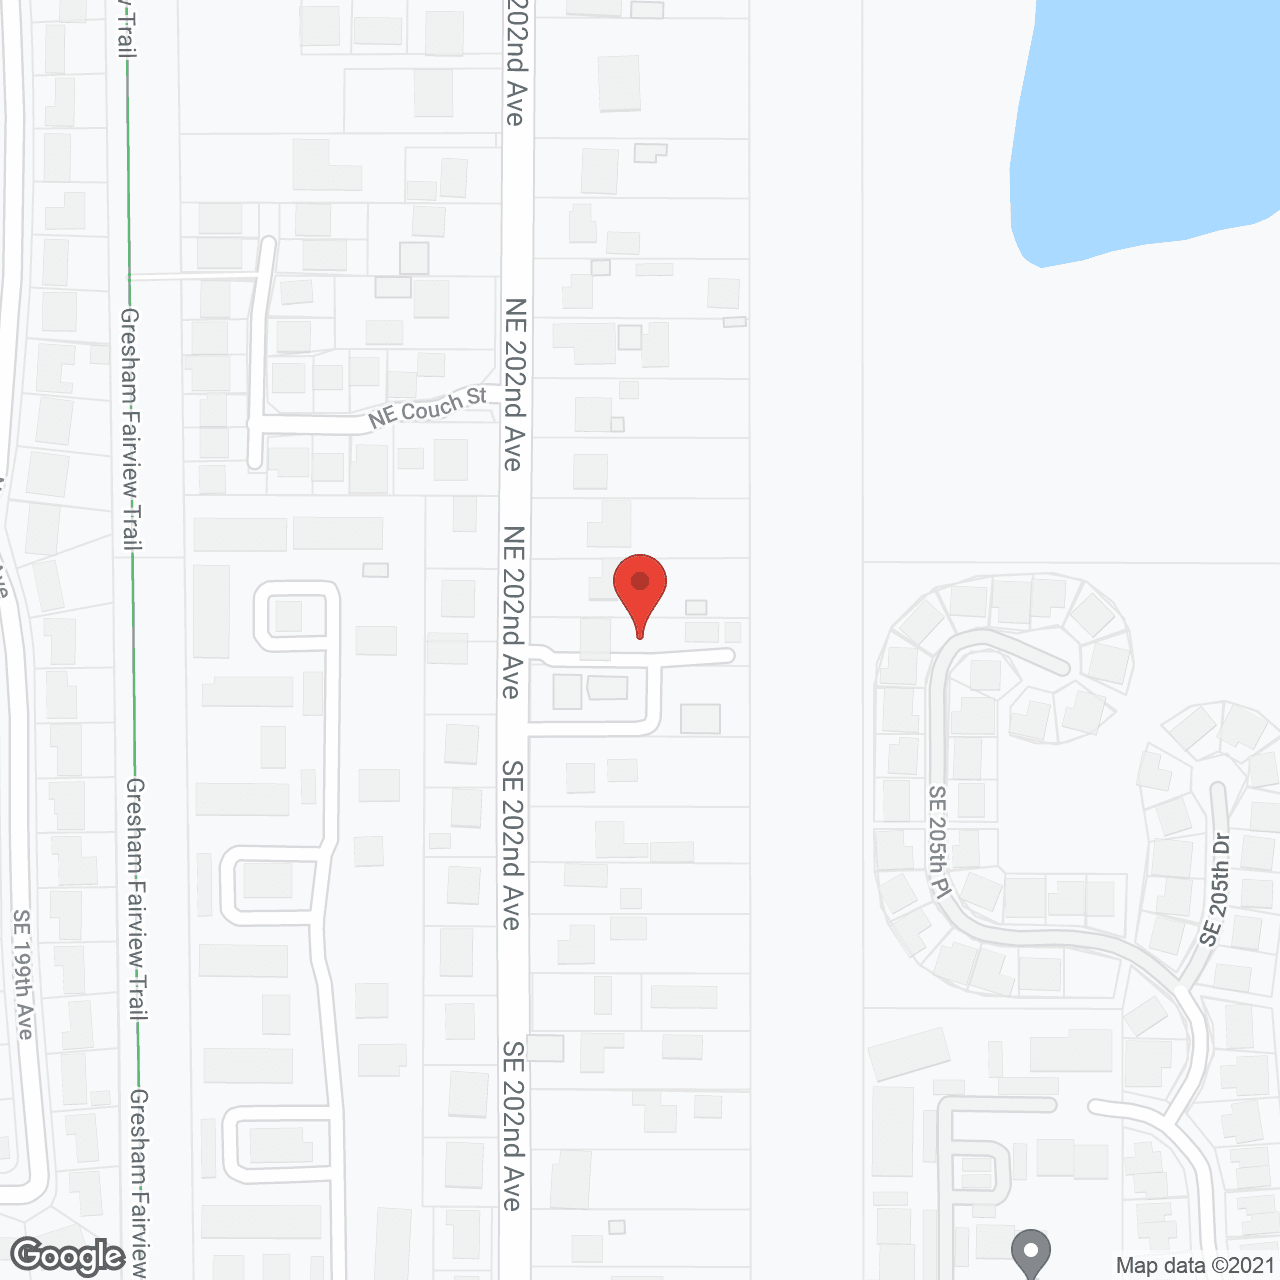 Elder Garden Care Home, LLC in google map